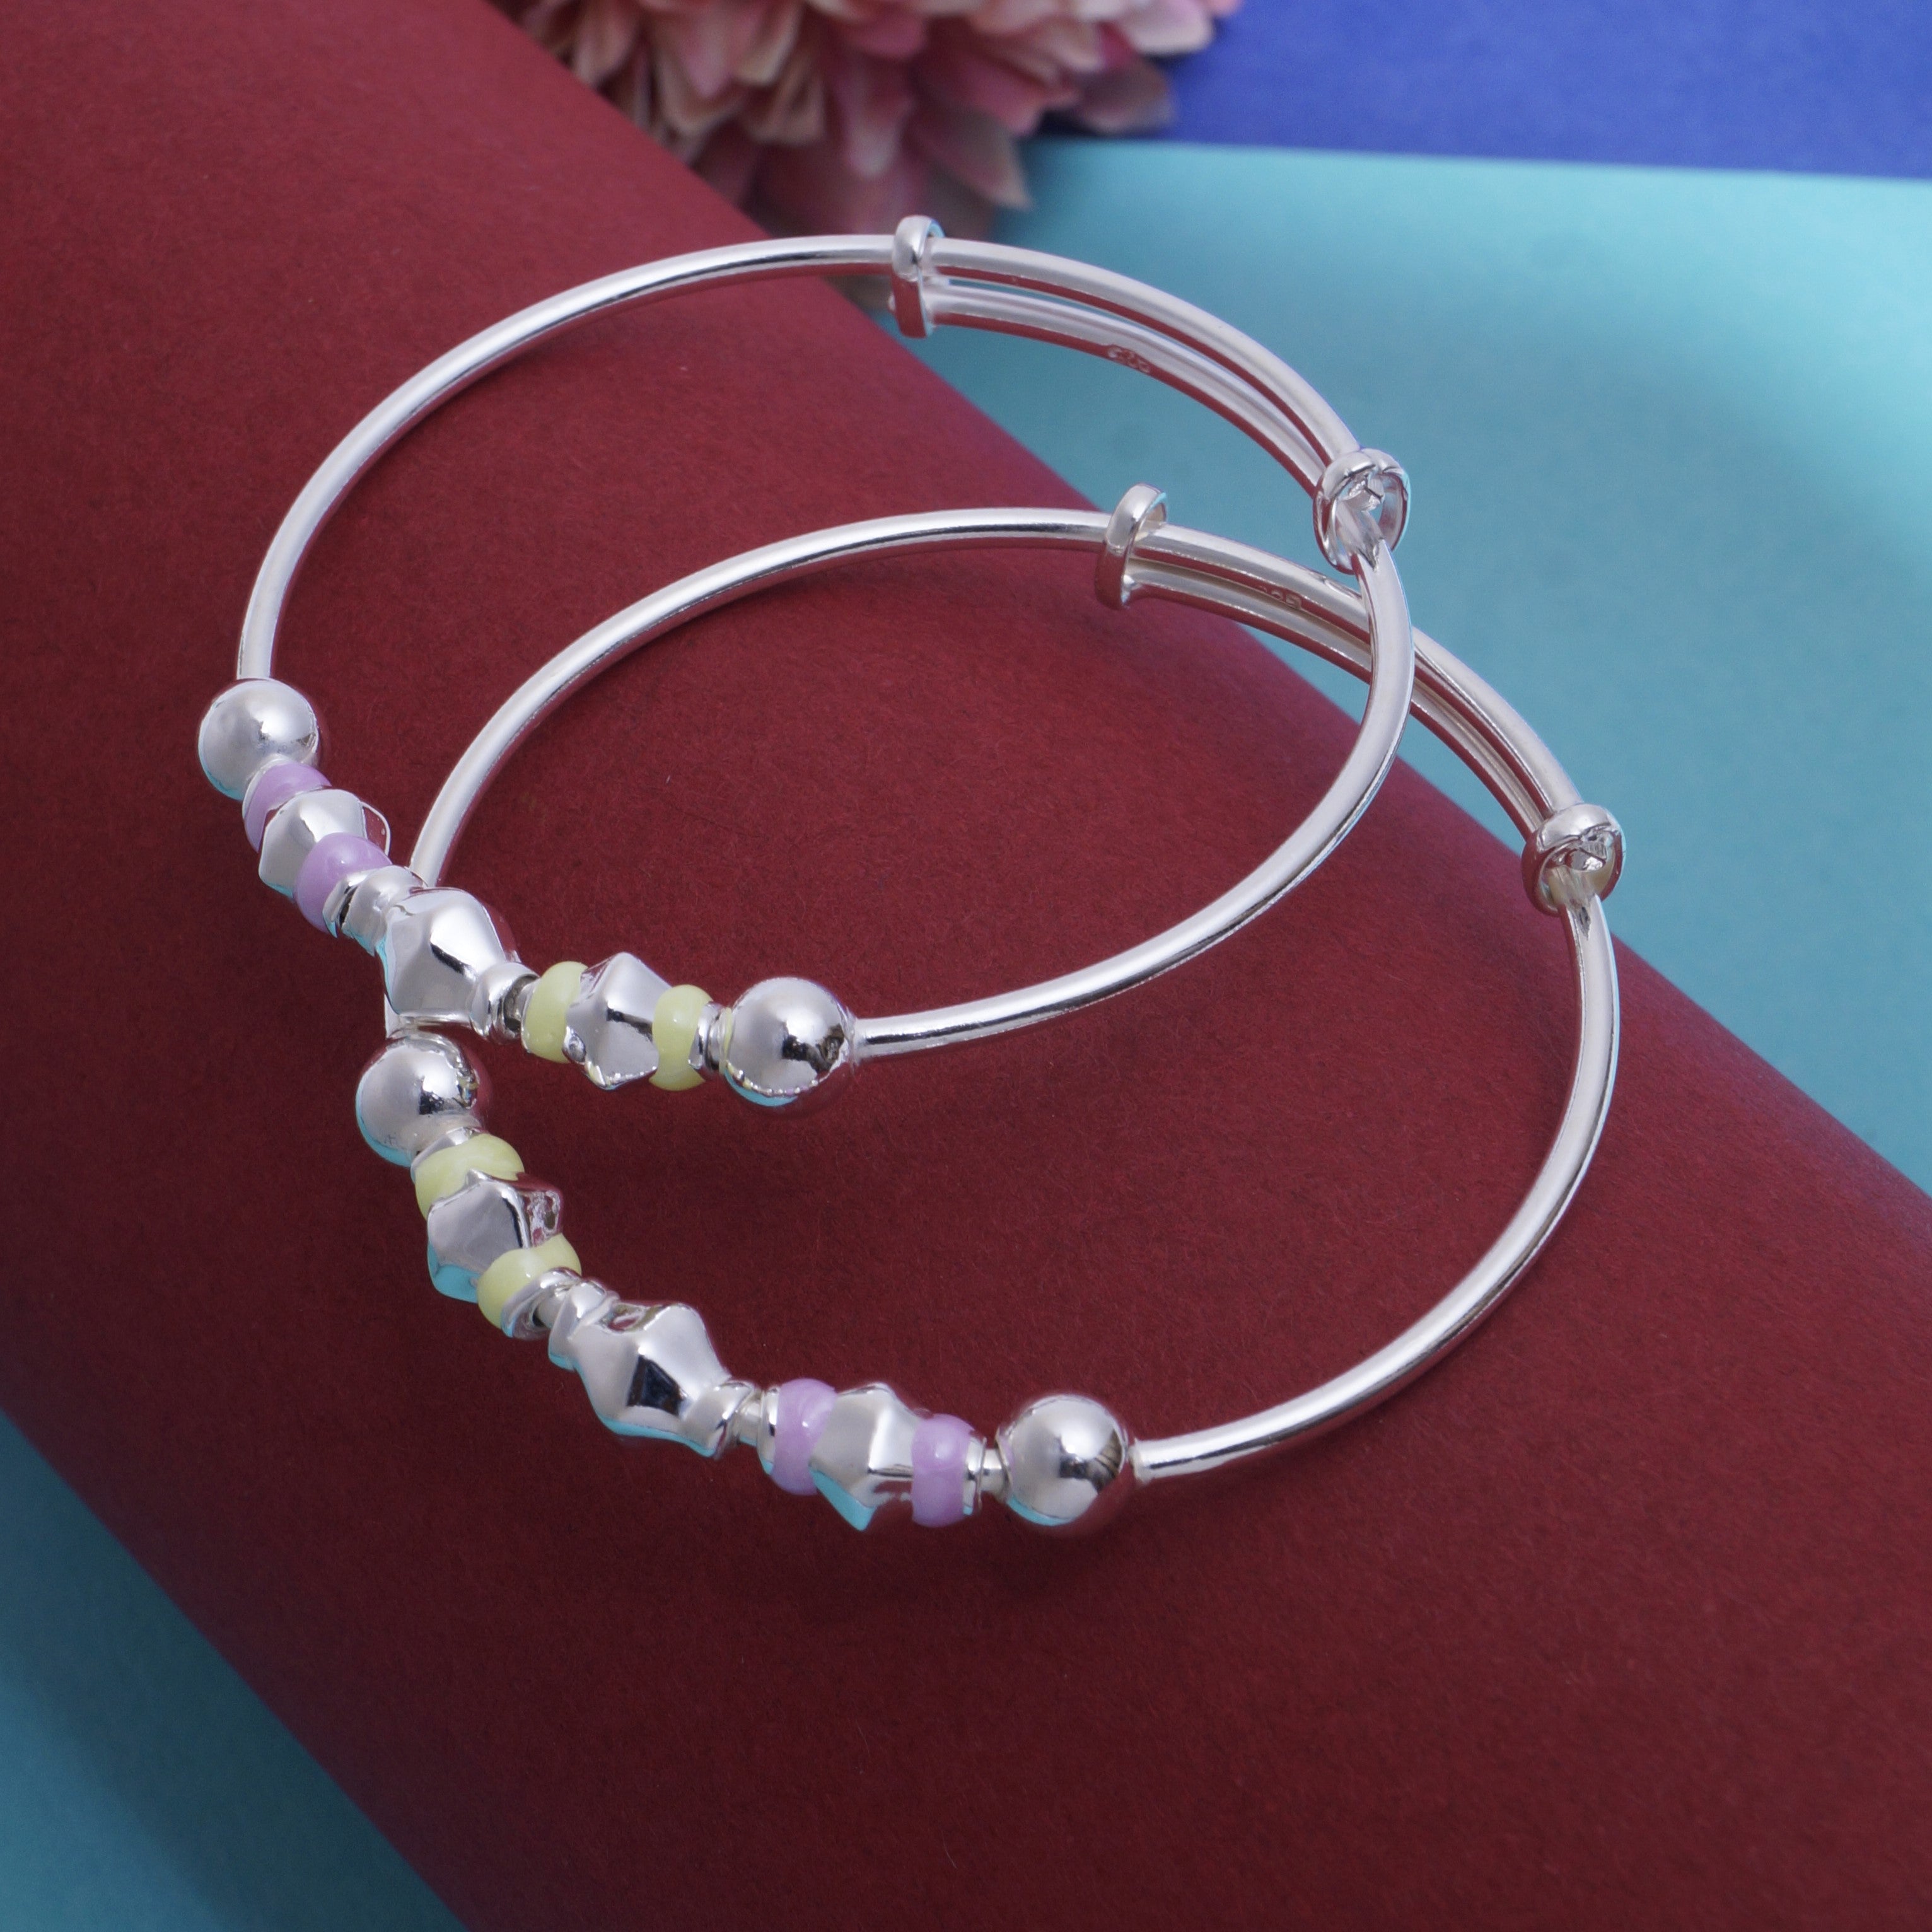 Accessories Women Wholesale | Accessories Girls Bracelets | Bracelet Chain  Accessory - Bracelets - Aliexpress